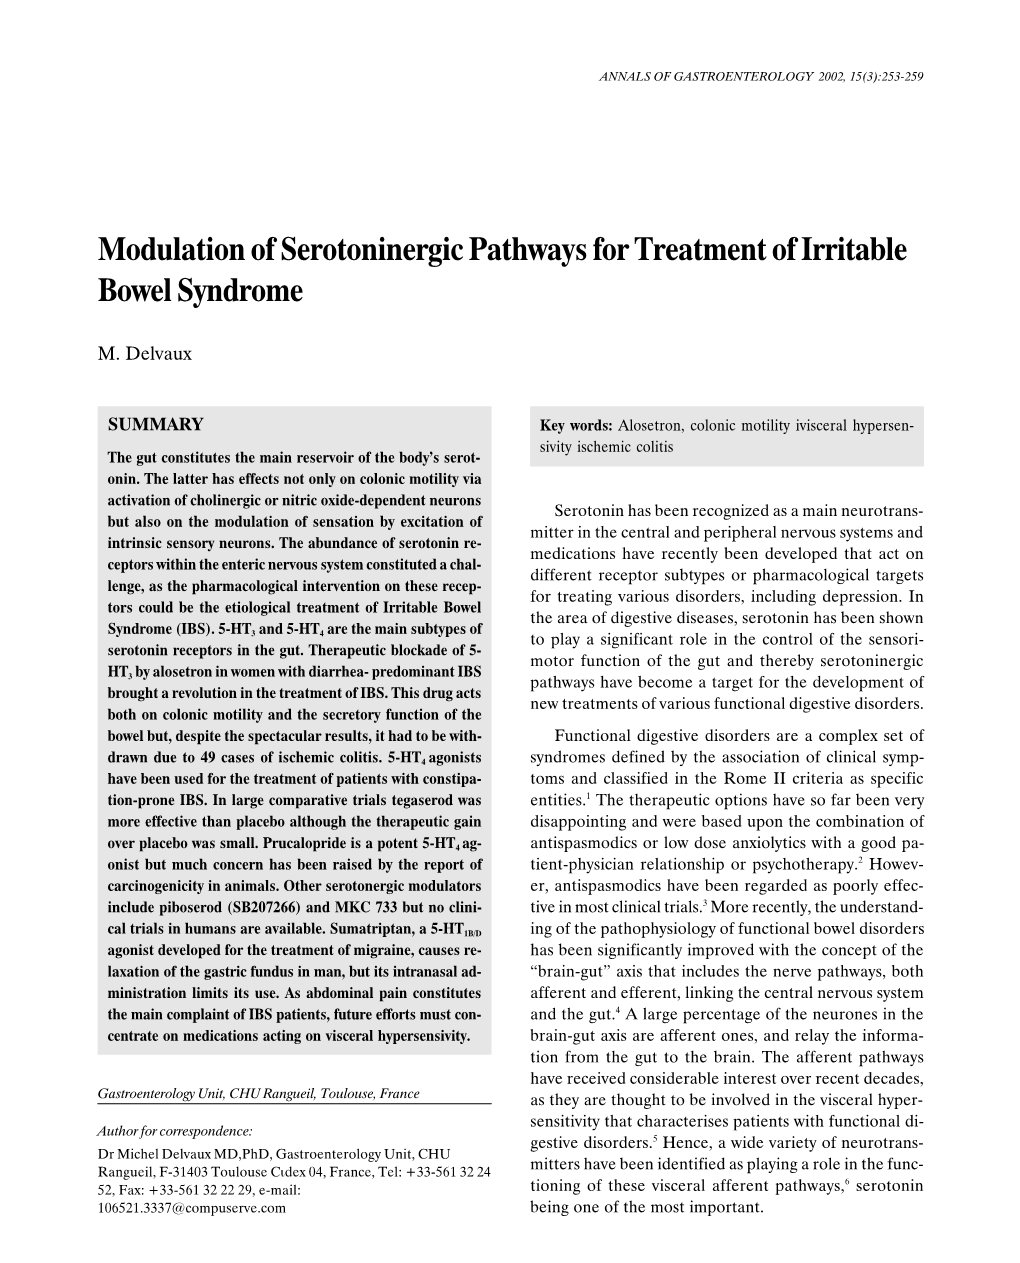 Modulation of Serotoninergic Pathways for Treatment of Irritable Bowel Syndrome